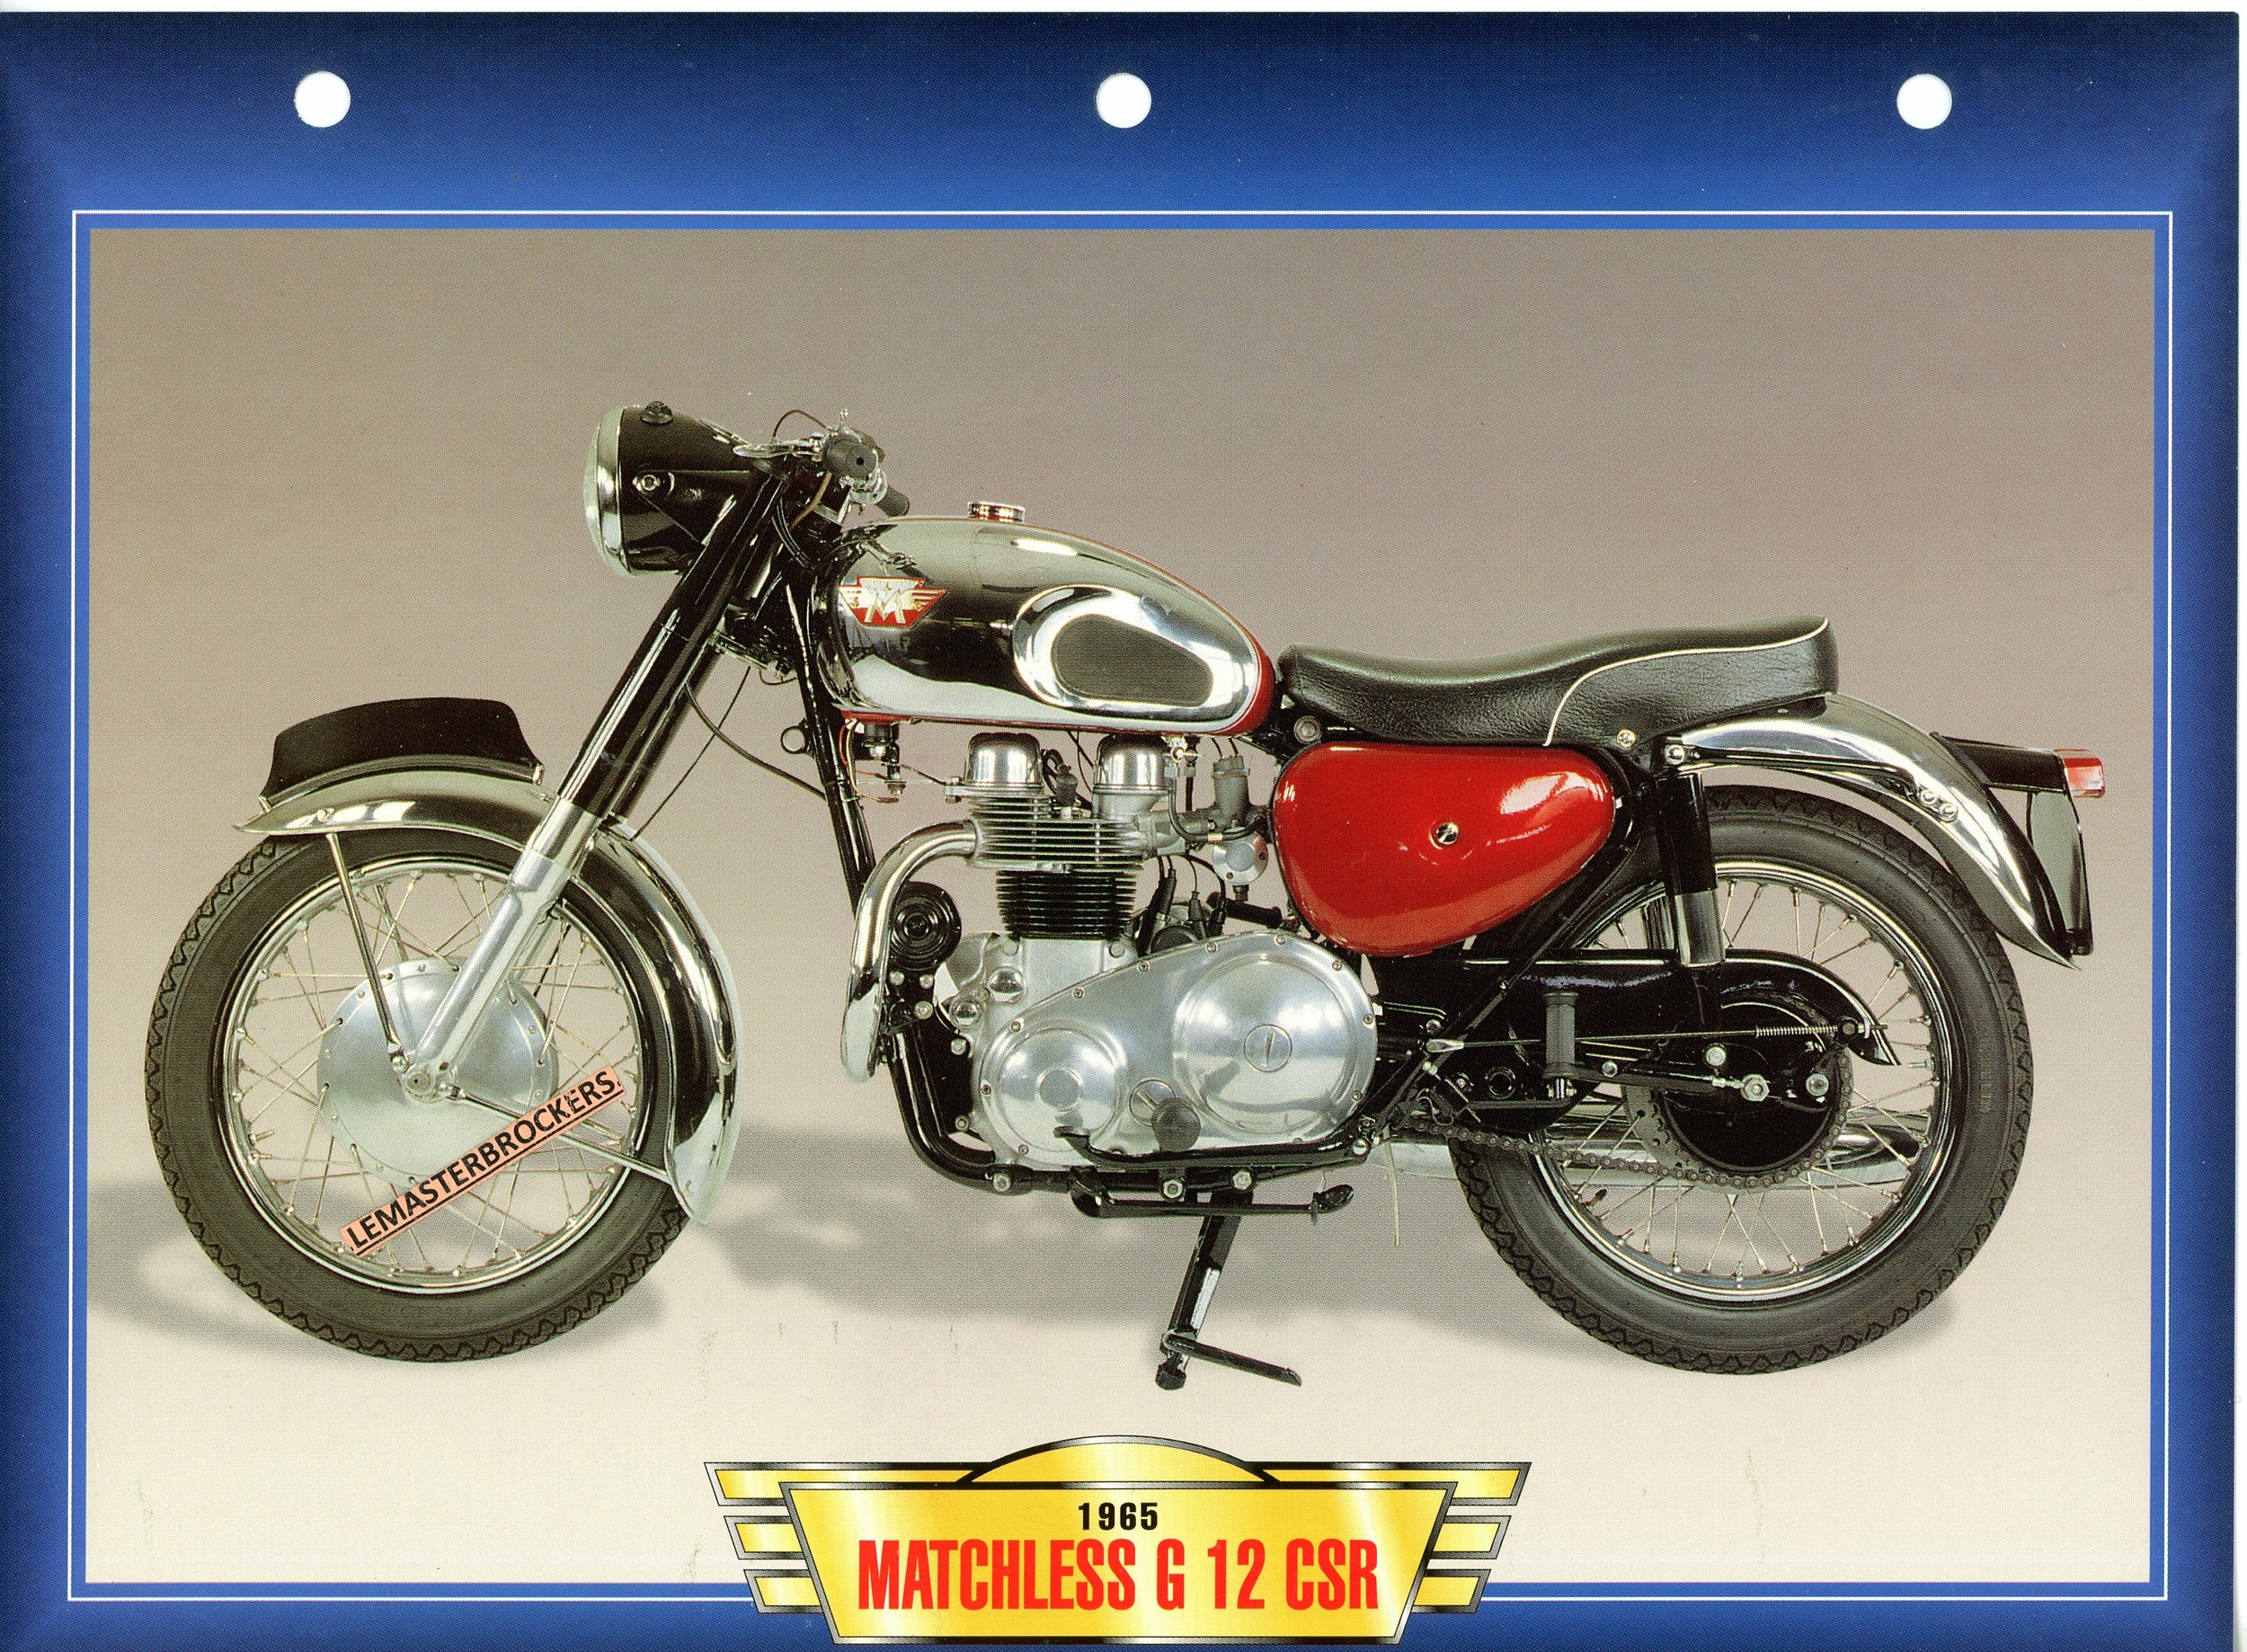 MATCHLESS-G12-CSR-1965-FICHE-MOTO-LEMASTERBROCKERS-ATLAS-ÉDITION